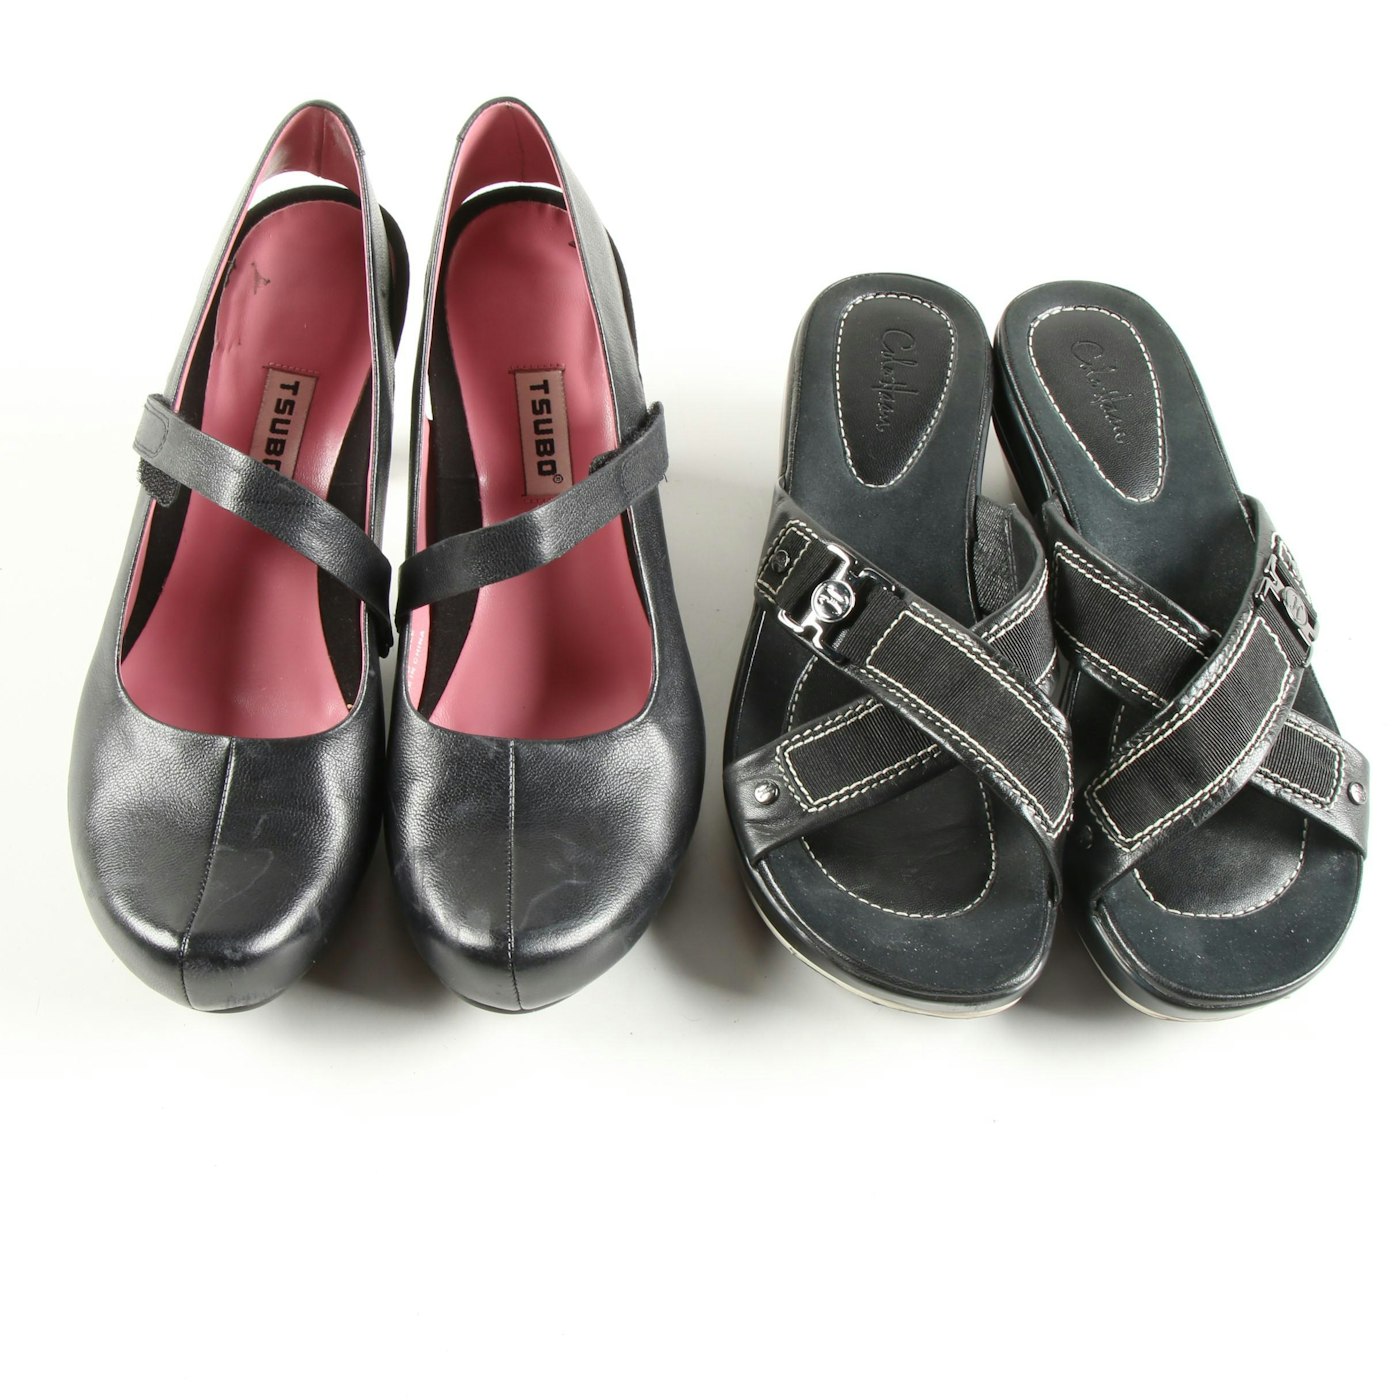 Tsubo Acrea Heels with Cole Haan Platform Sandals in Black | EBTH